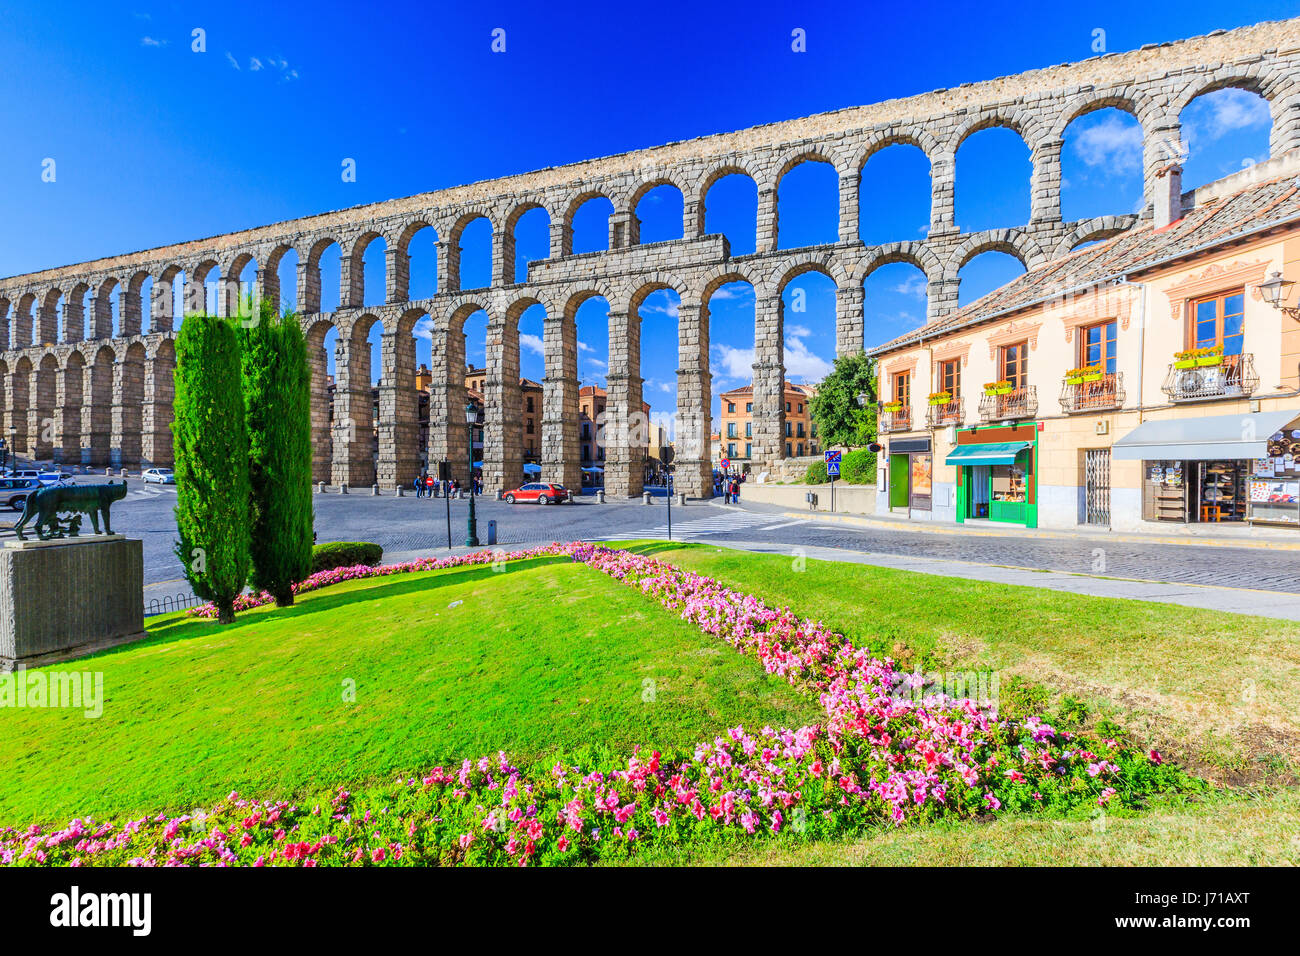 Segovia, Spanien. Blick auf Plaza del Azoguejo und der antiken römischen Aquädukt. Stockfoto